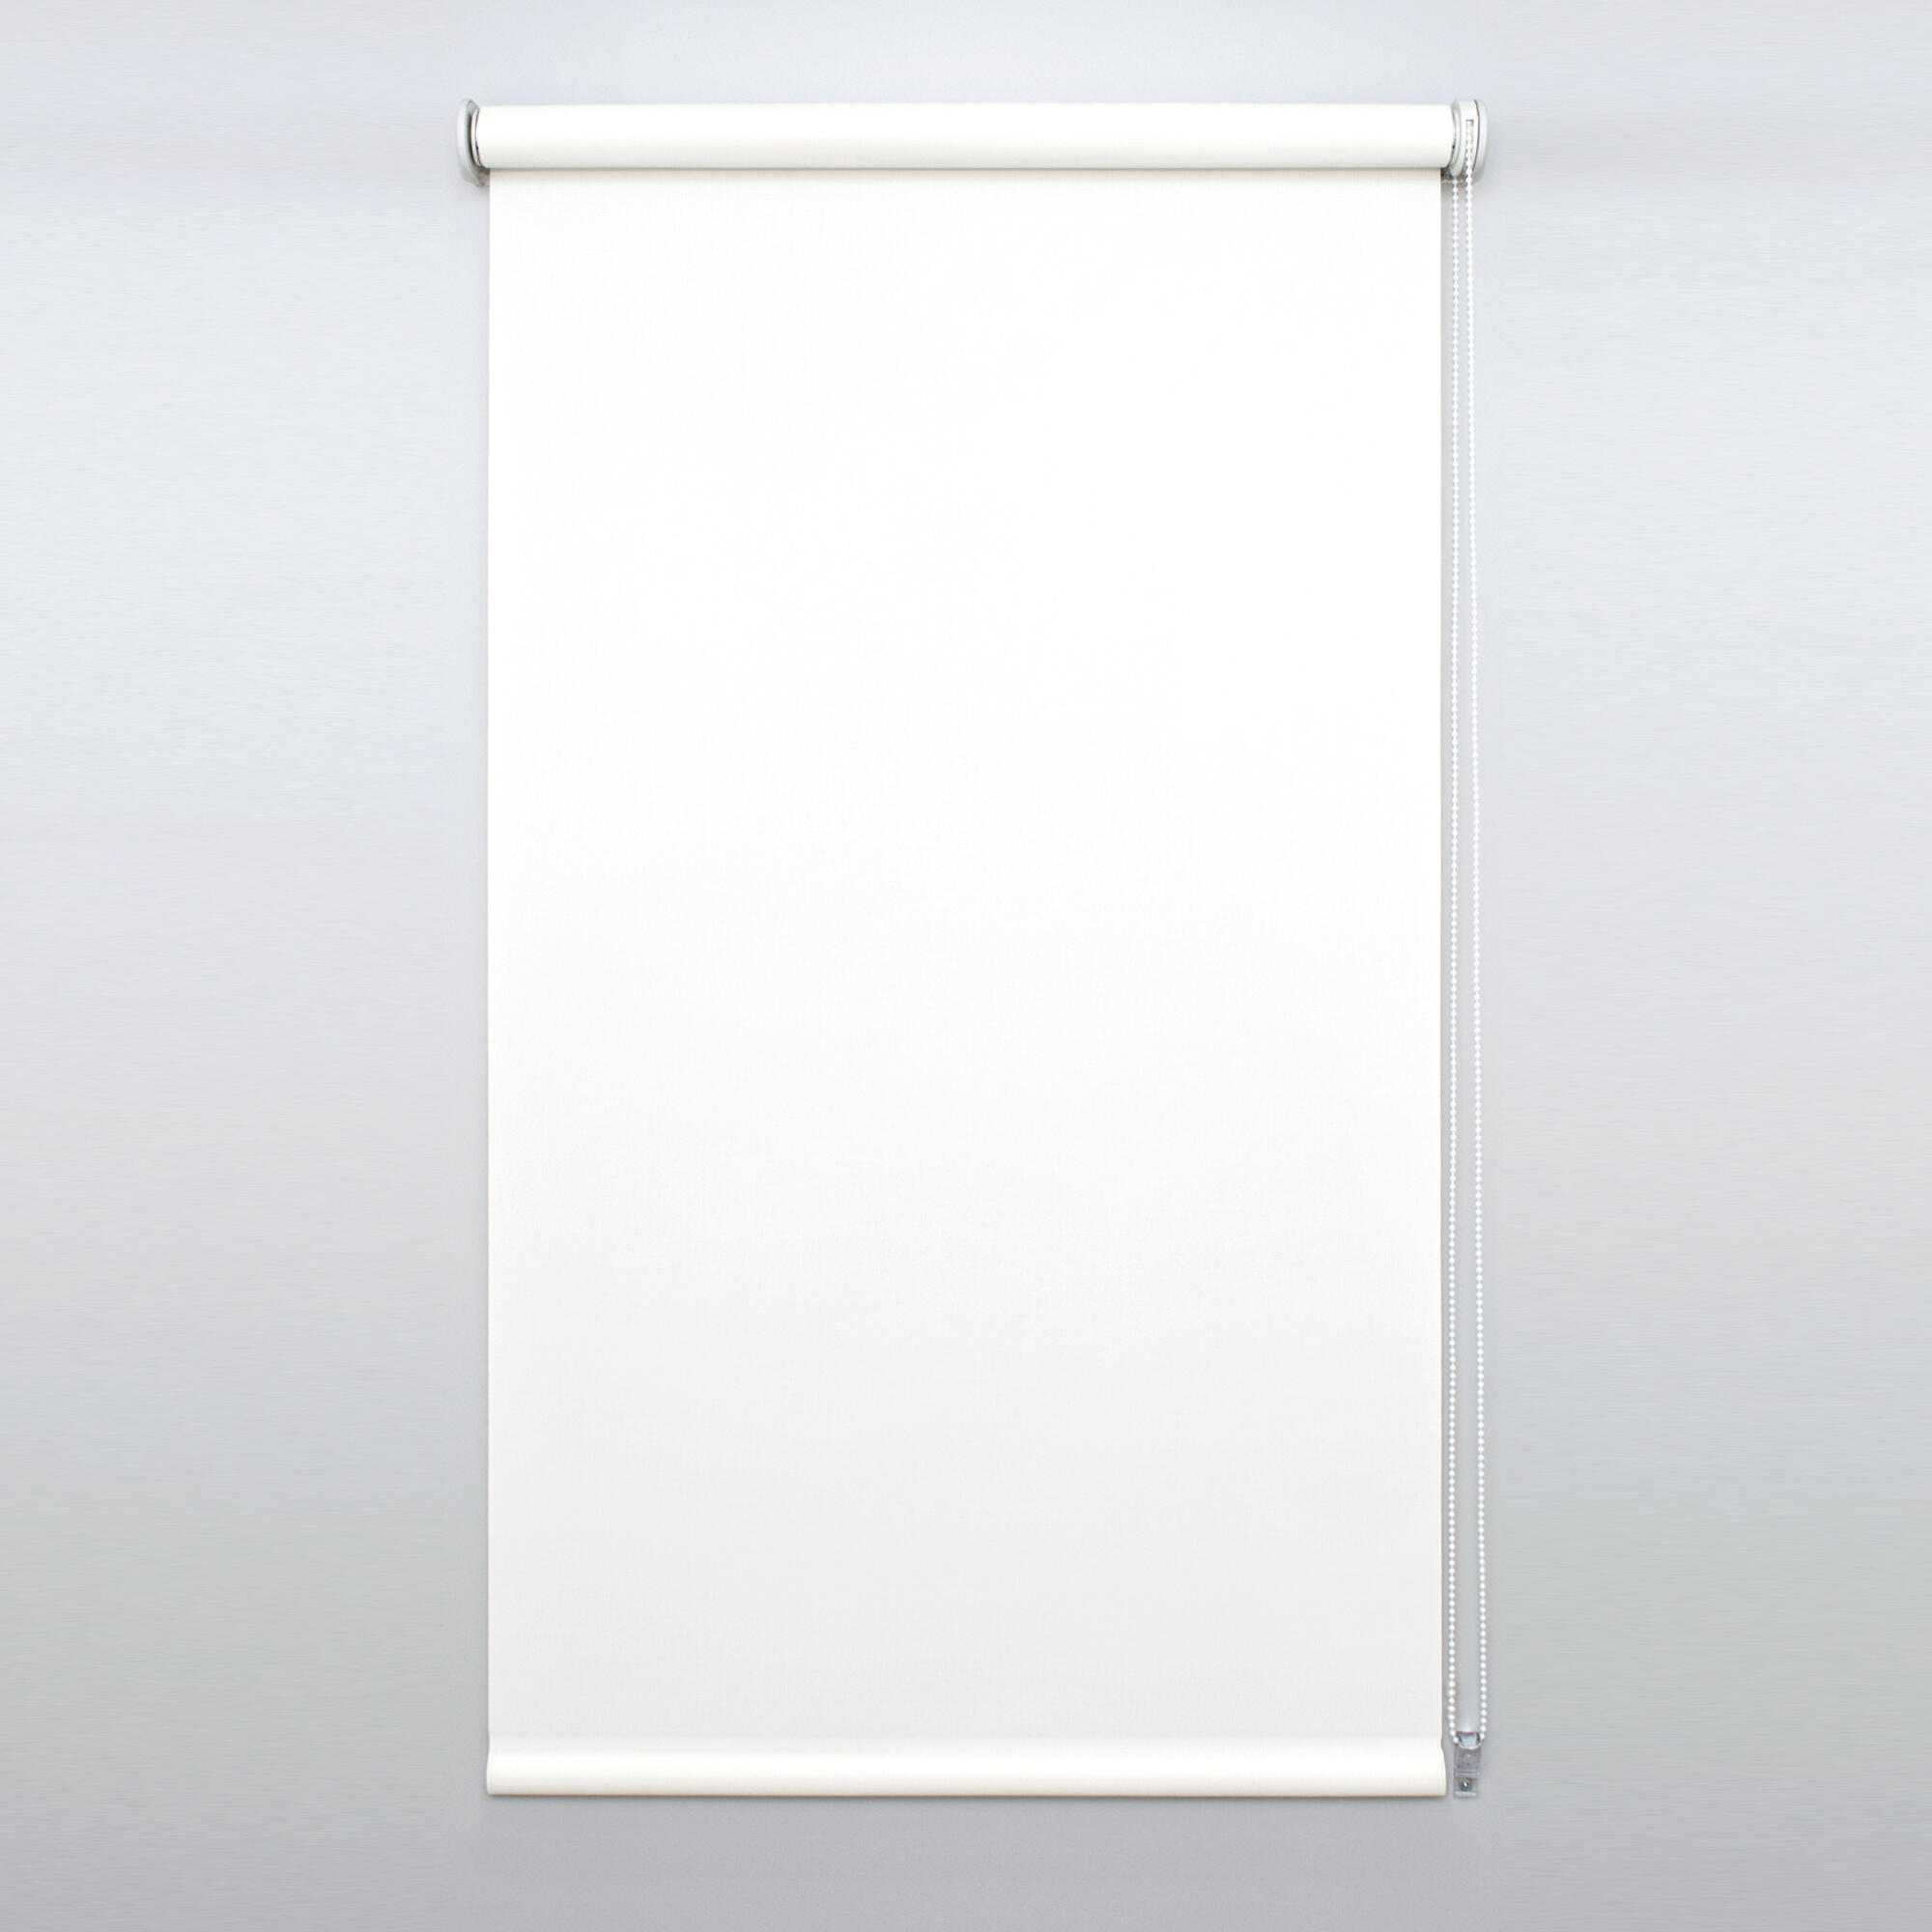 Estor enrollable screen screen bari cadena blanca blanco solarmanes de 150x250cm